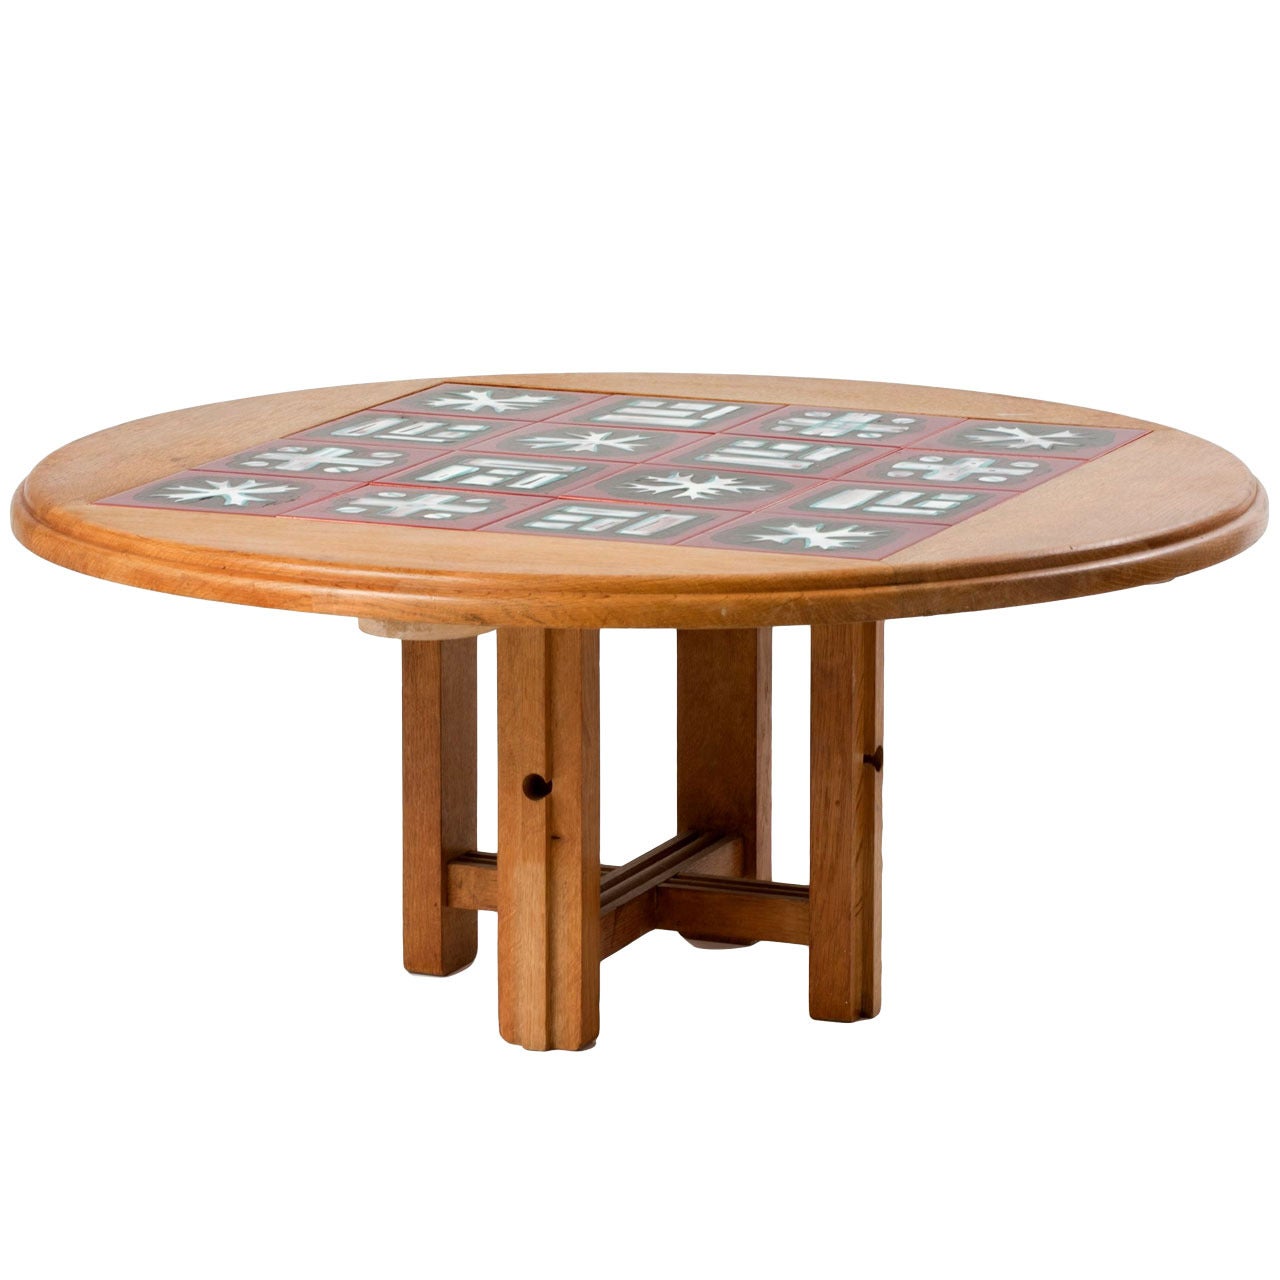 "Ladislas" Oak and Ceramic Tile Coffee Table by Robert Guillerme